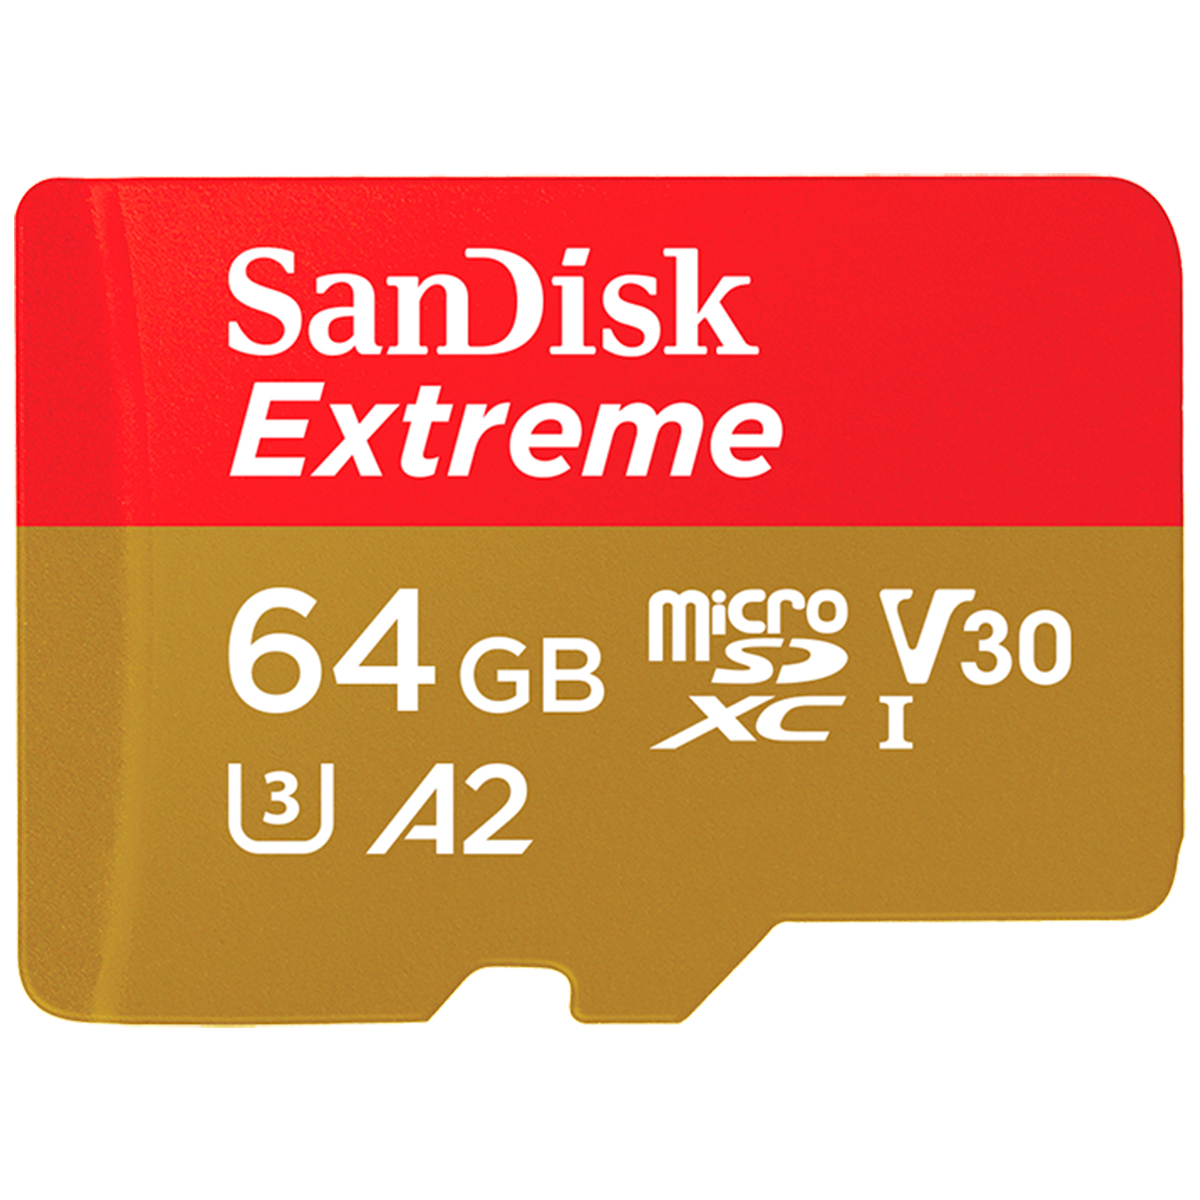 MEMORIA EXTREME SANDISK 64GB | Office Depot Guatemala